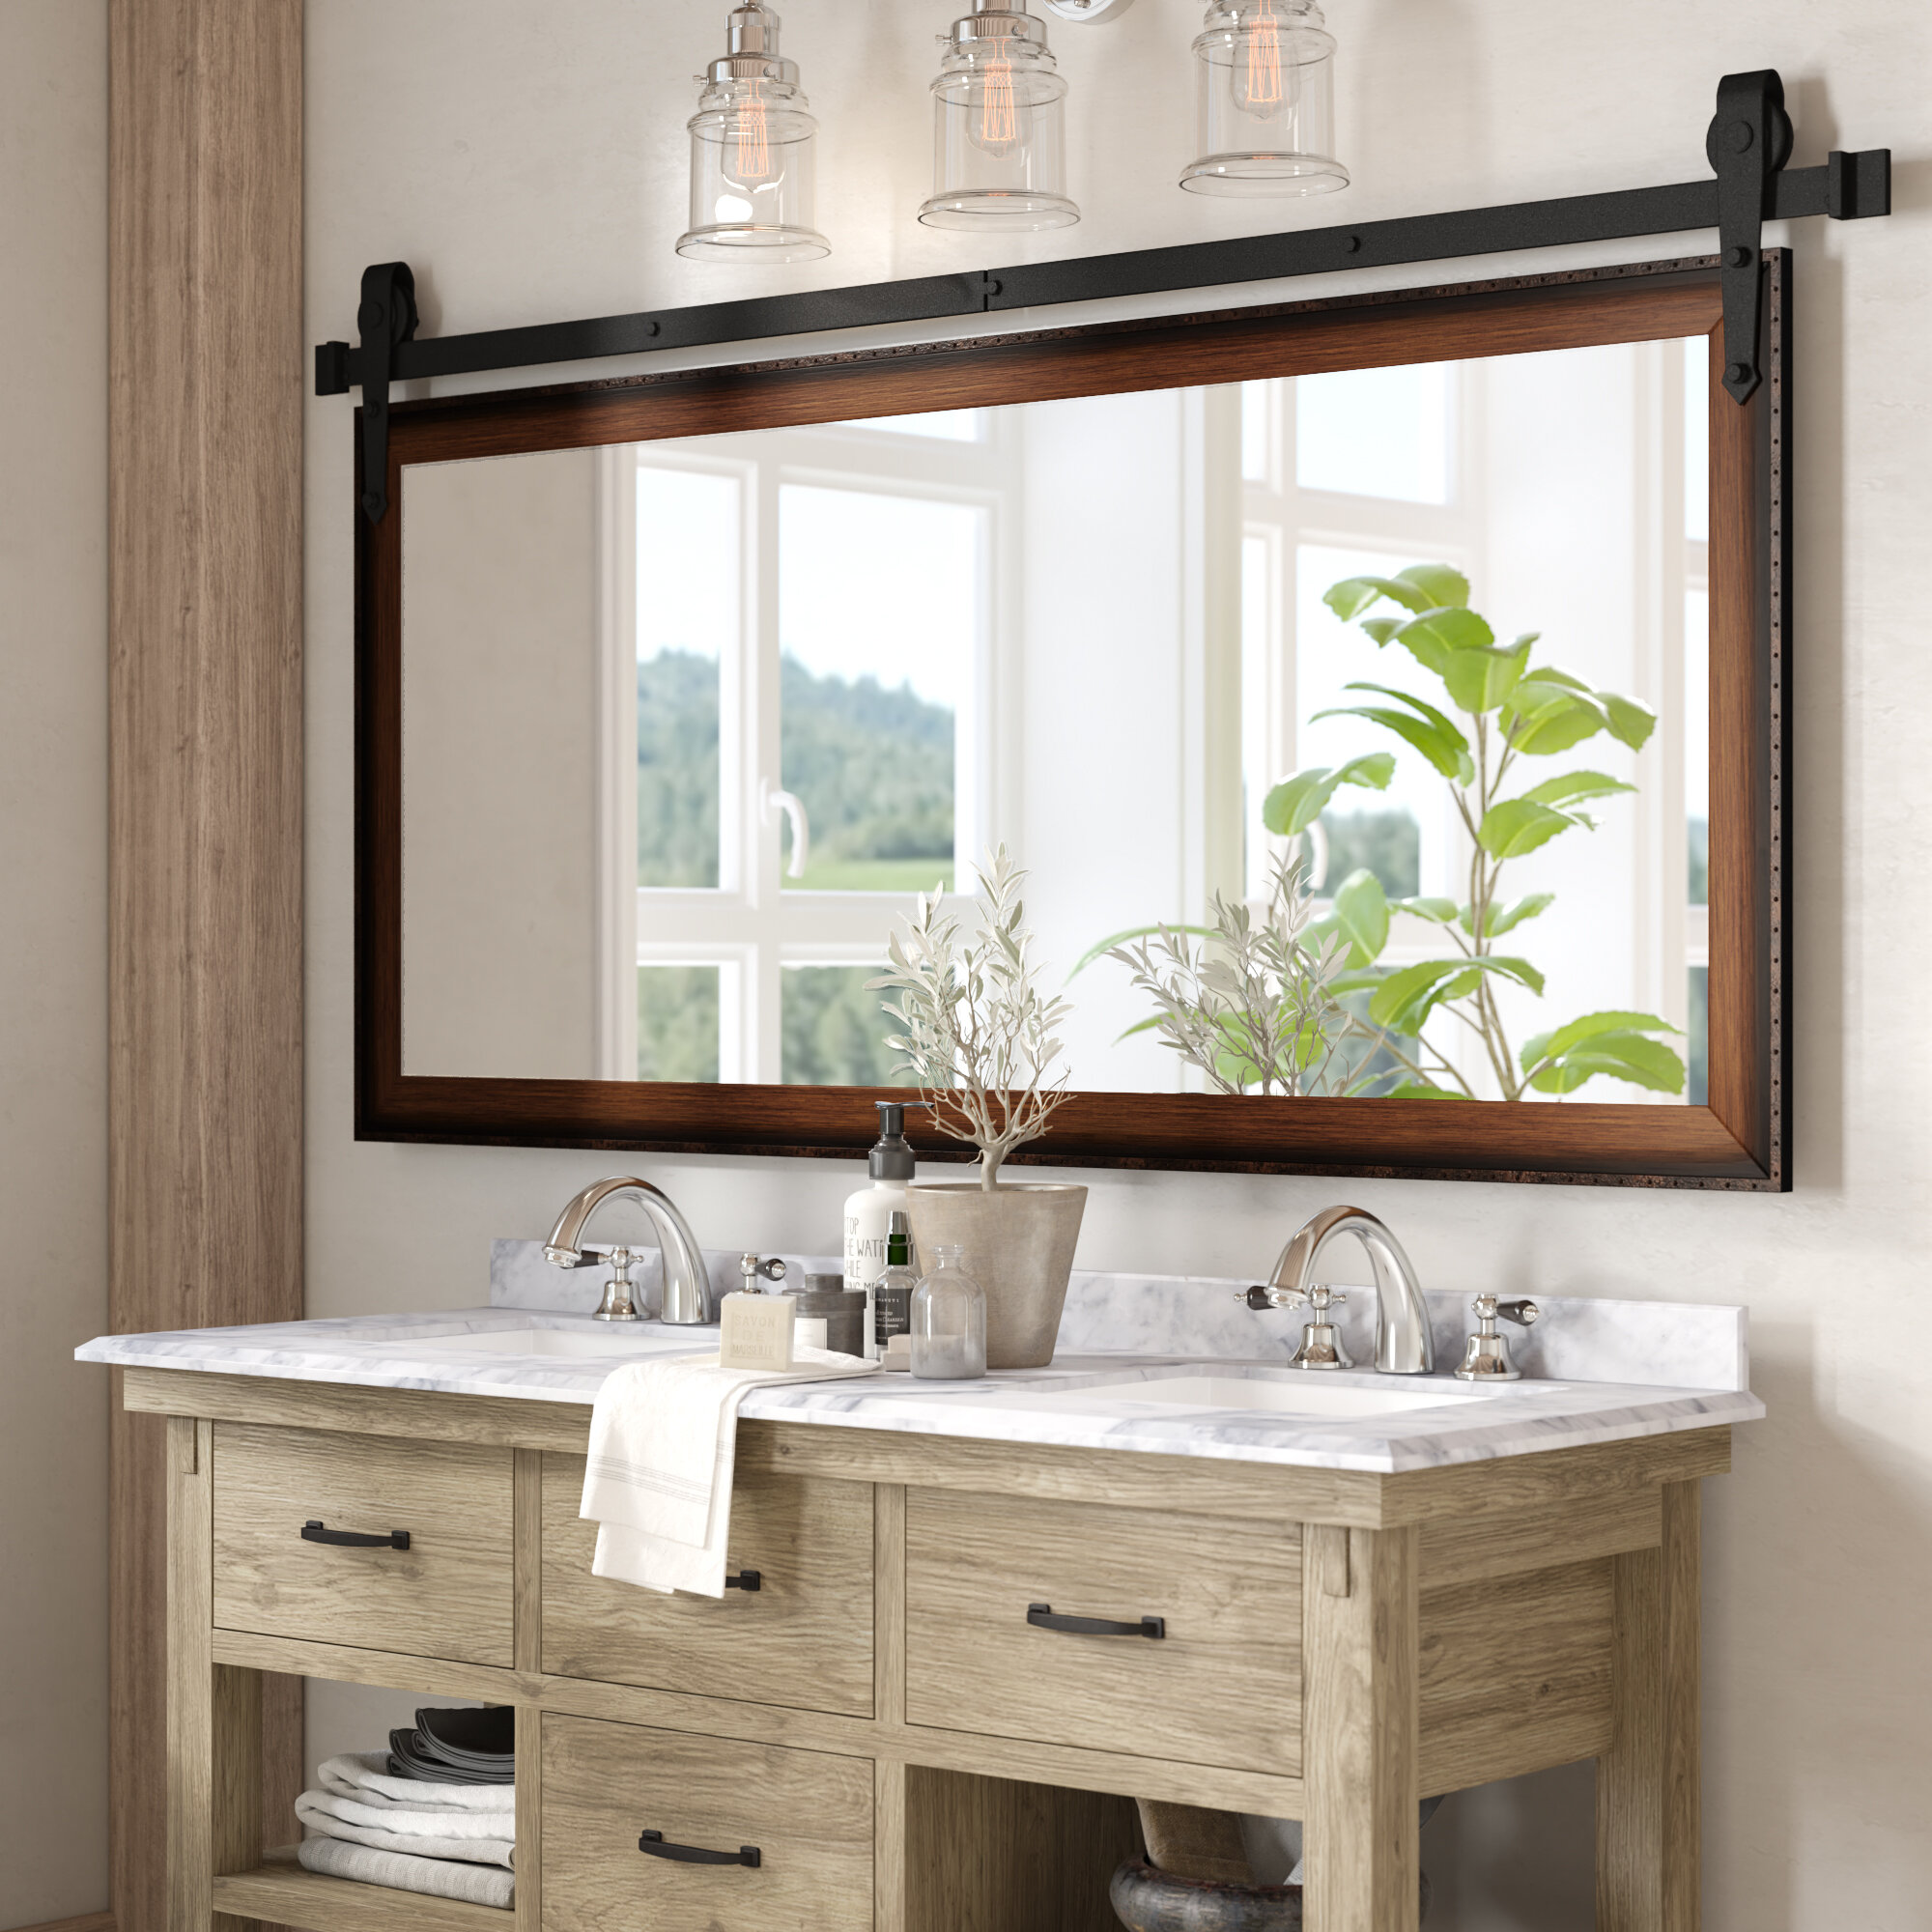 Laurel Foundry Modern Farmhouse Abraham Bathroom Vanity Mirror Reviews Wayfair